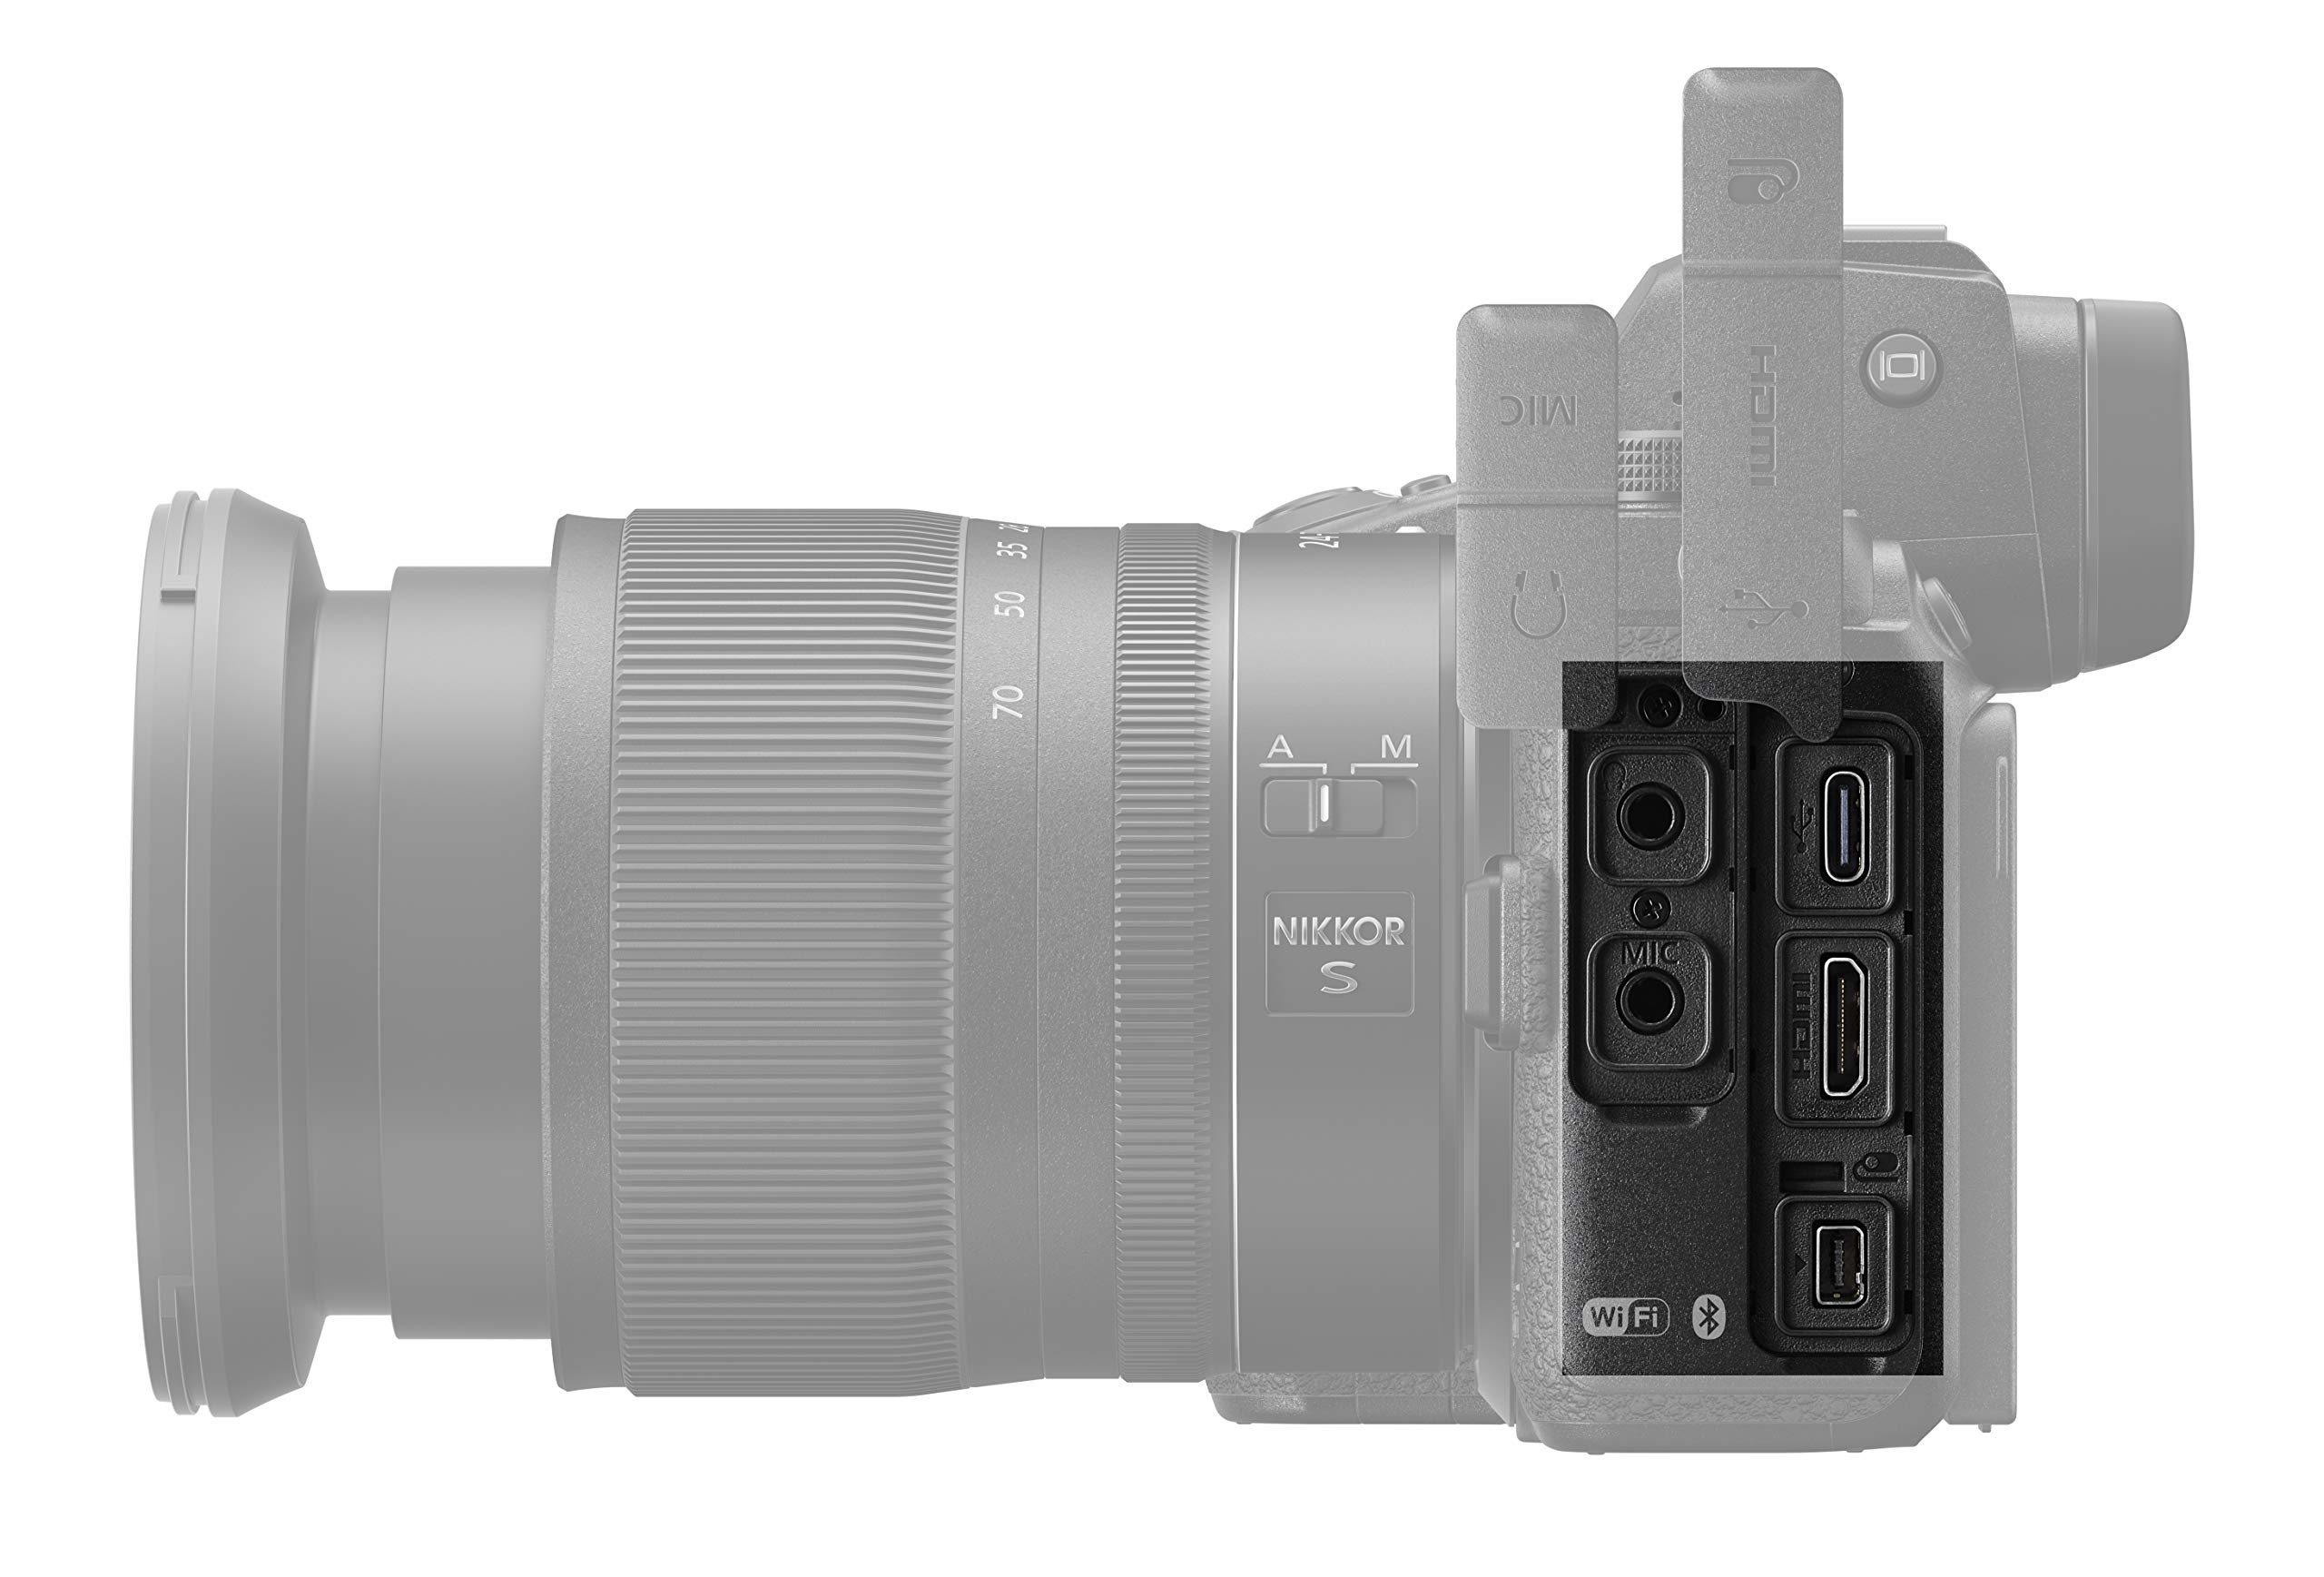 Nikon Z 7II with Zoom Lens | Ultra-high Resolution Full-Frame mirrorless Stills/Video Camera with 24-70mm f/4 Lens | Nikon USA Model